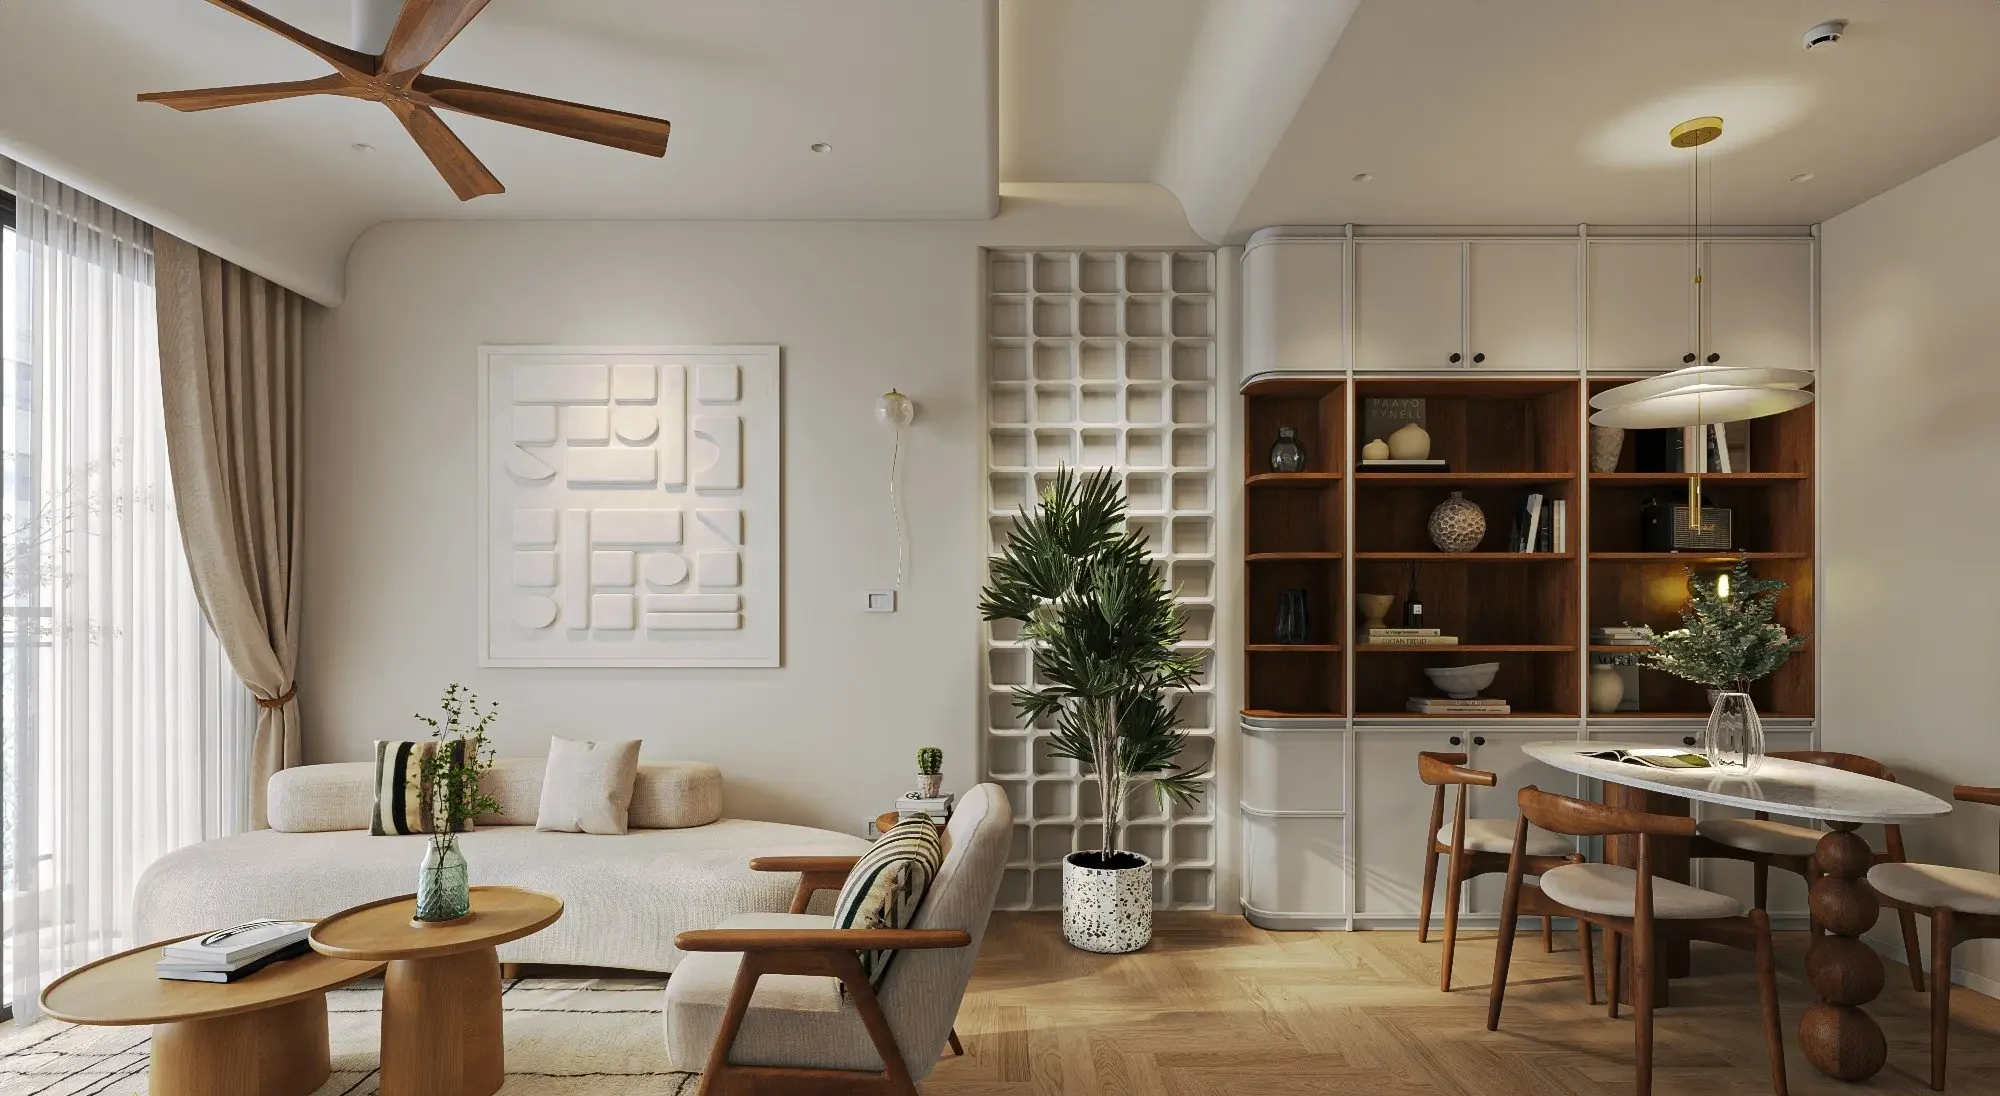 Thiết kế nội thất Wabi Sabi đề cao sự tối giản